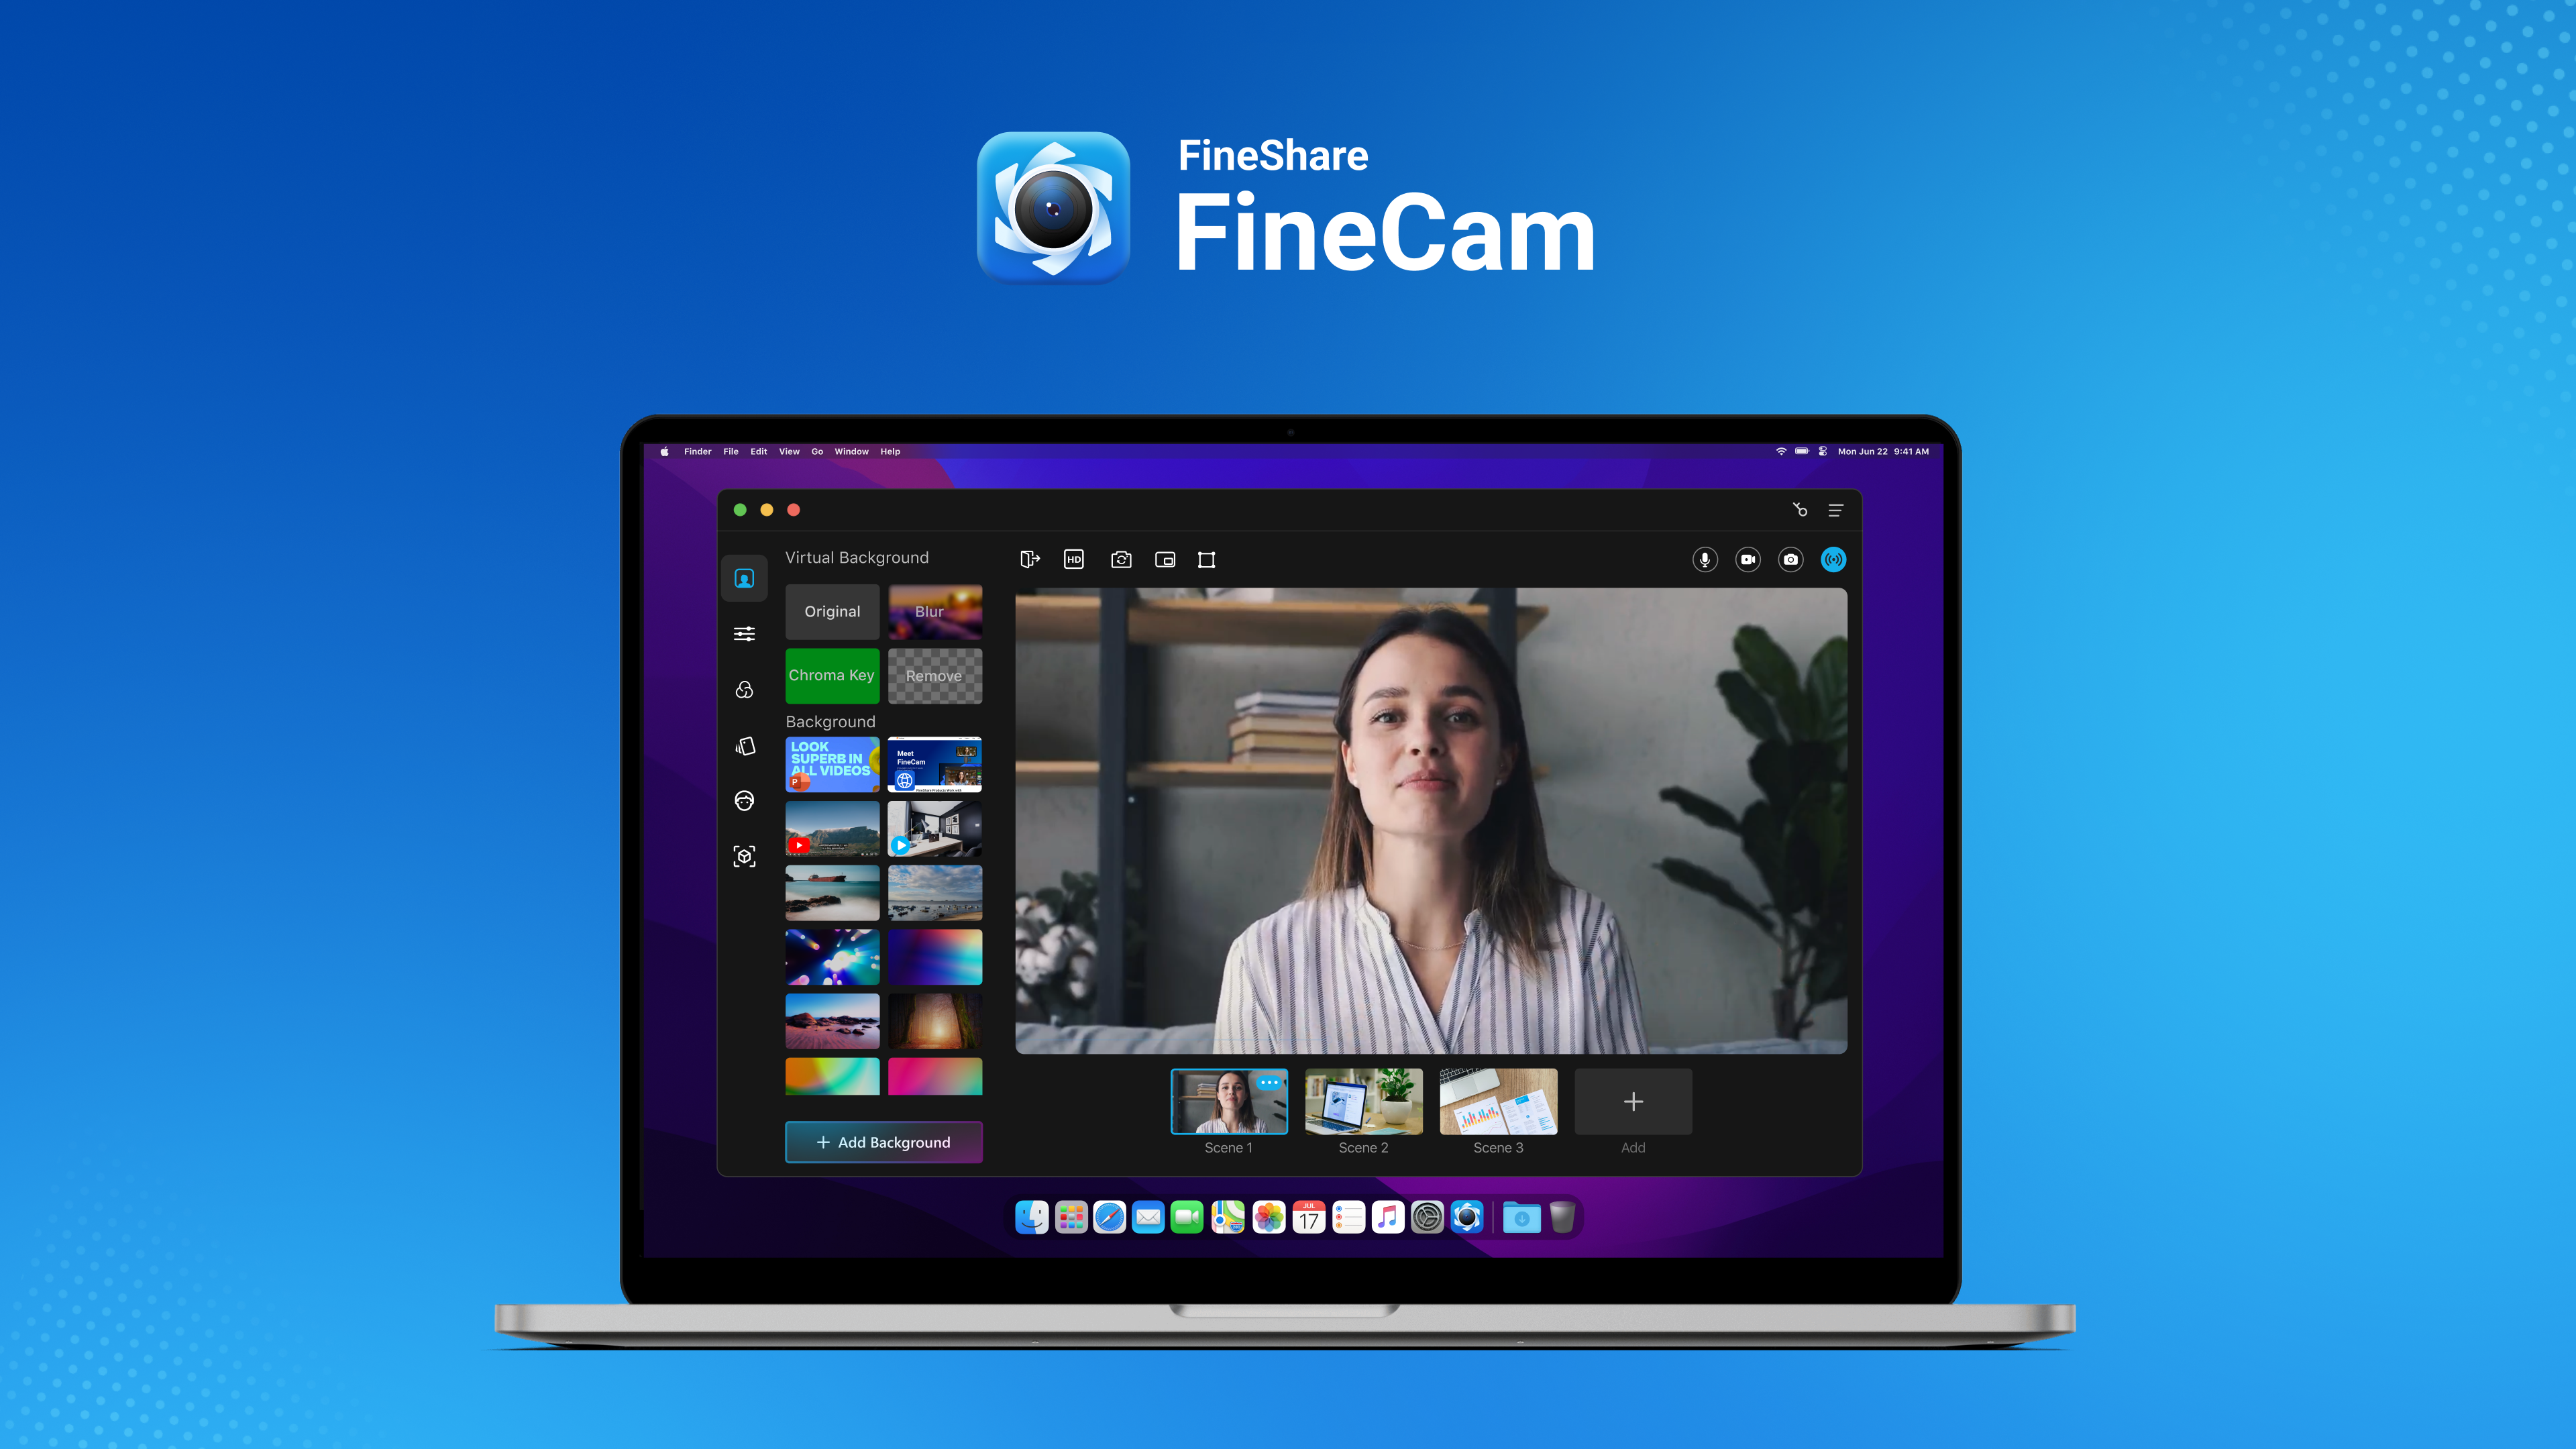 FineShare FineCam software